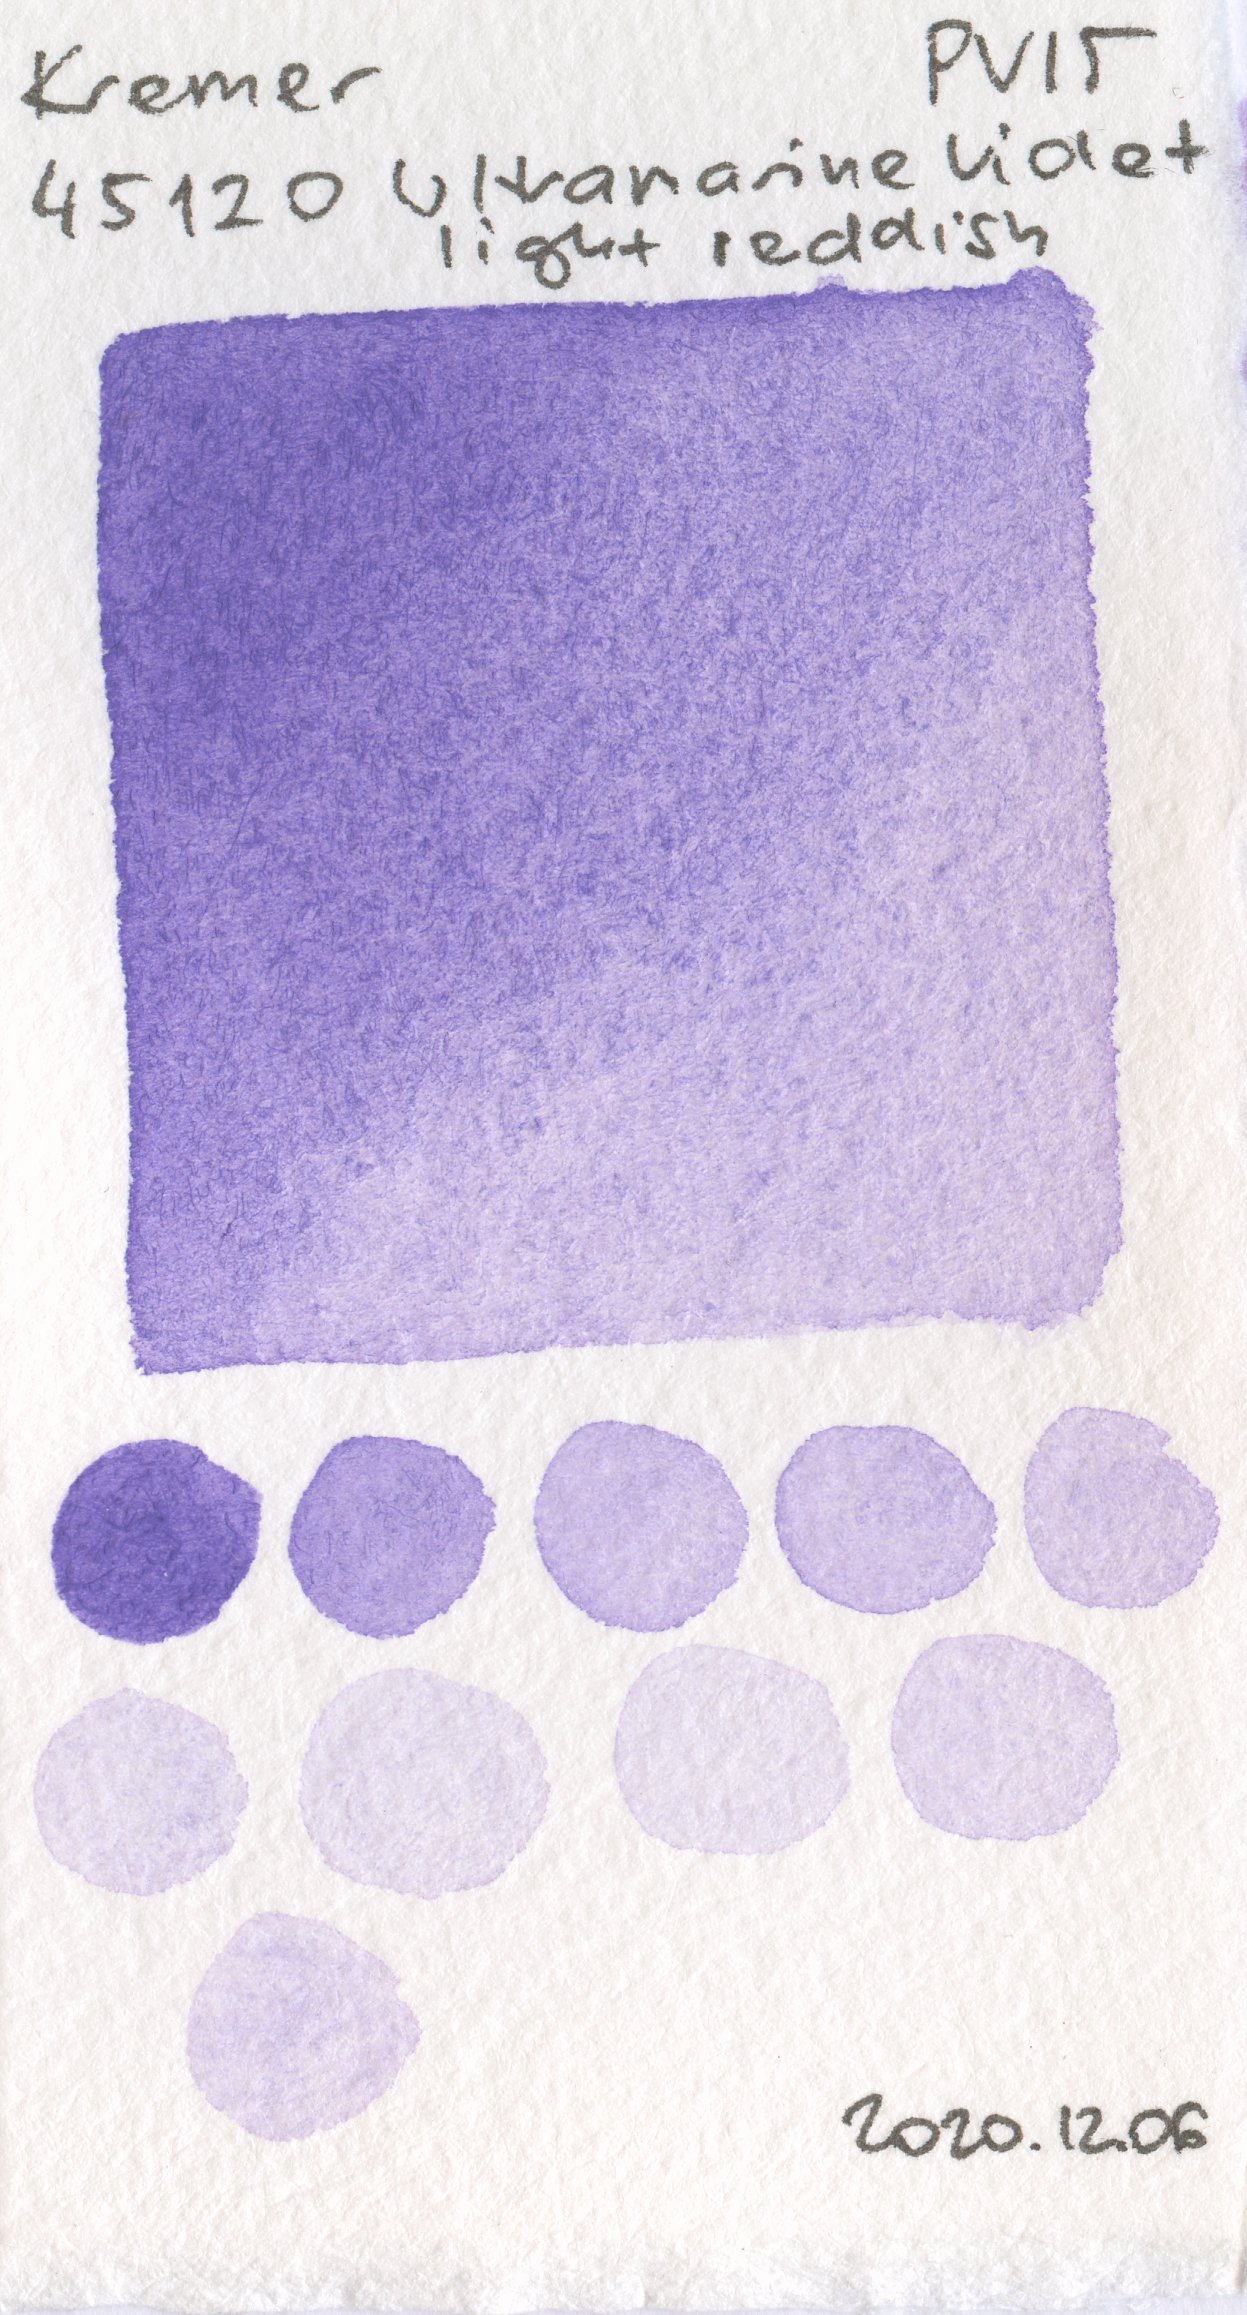 Kremer Pigmente [Dry] Pigments 45120 Ultramarine Violet, light reddish PV15 watercolor swatch